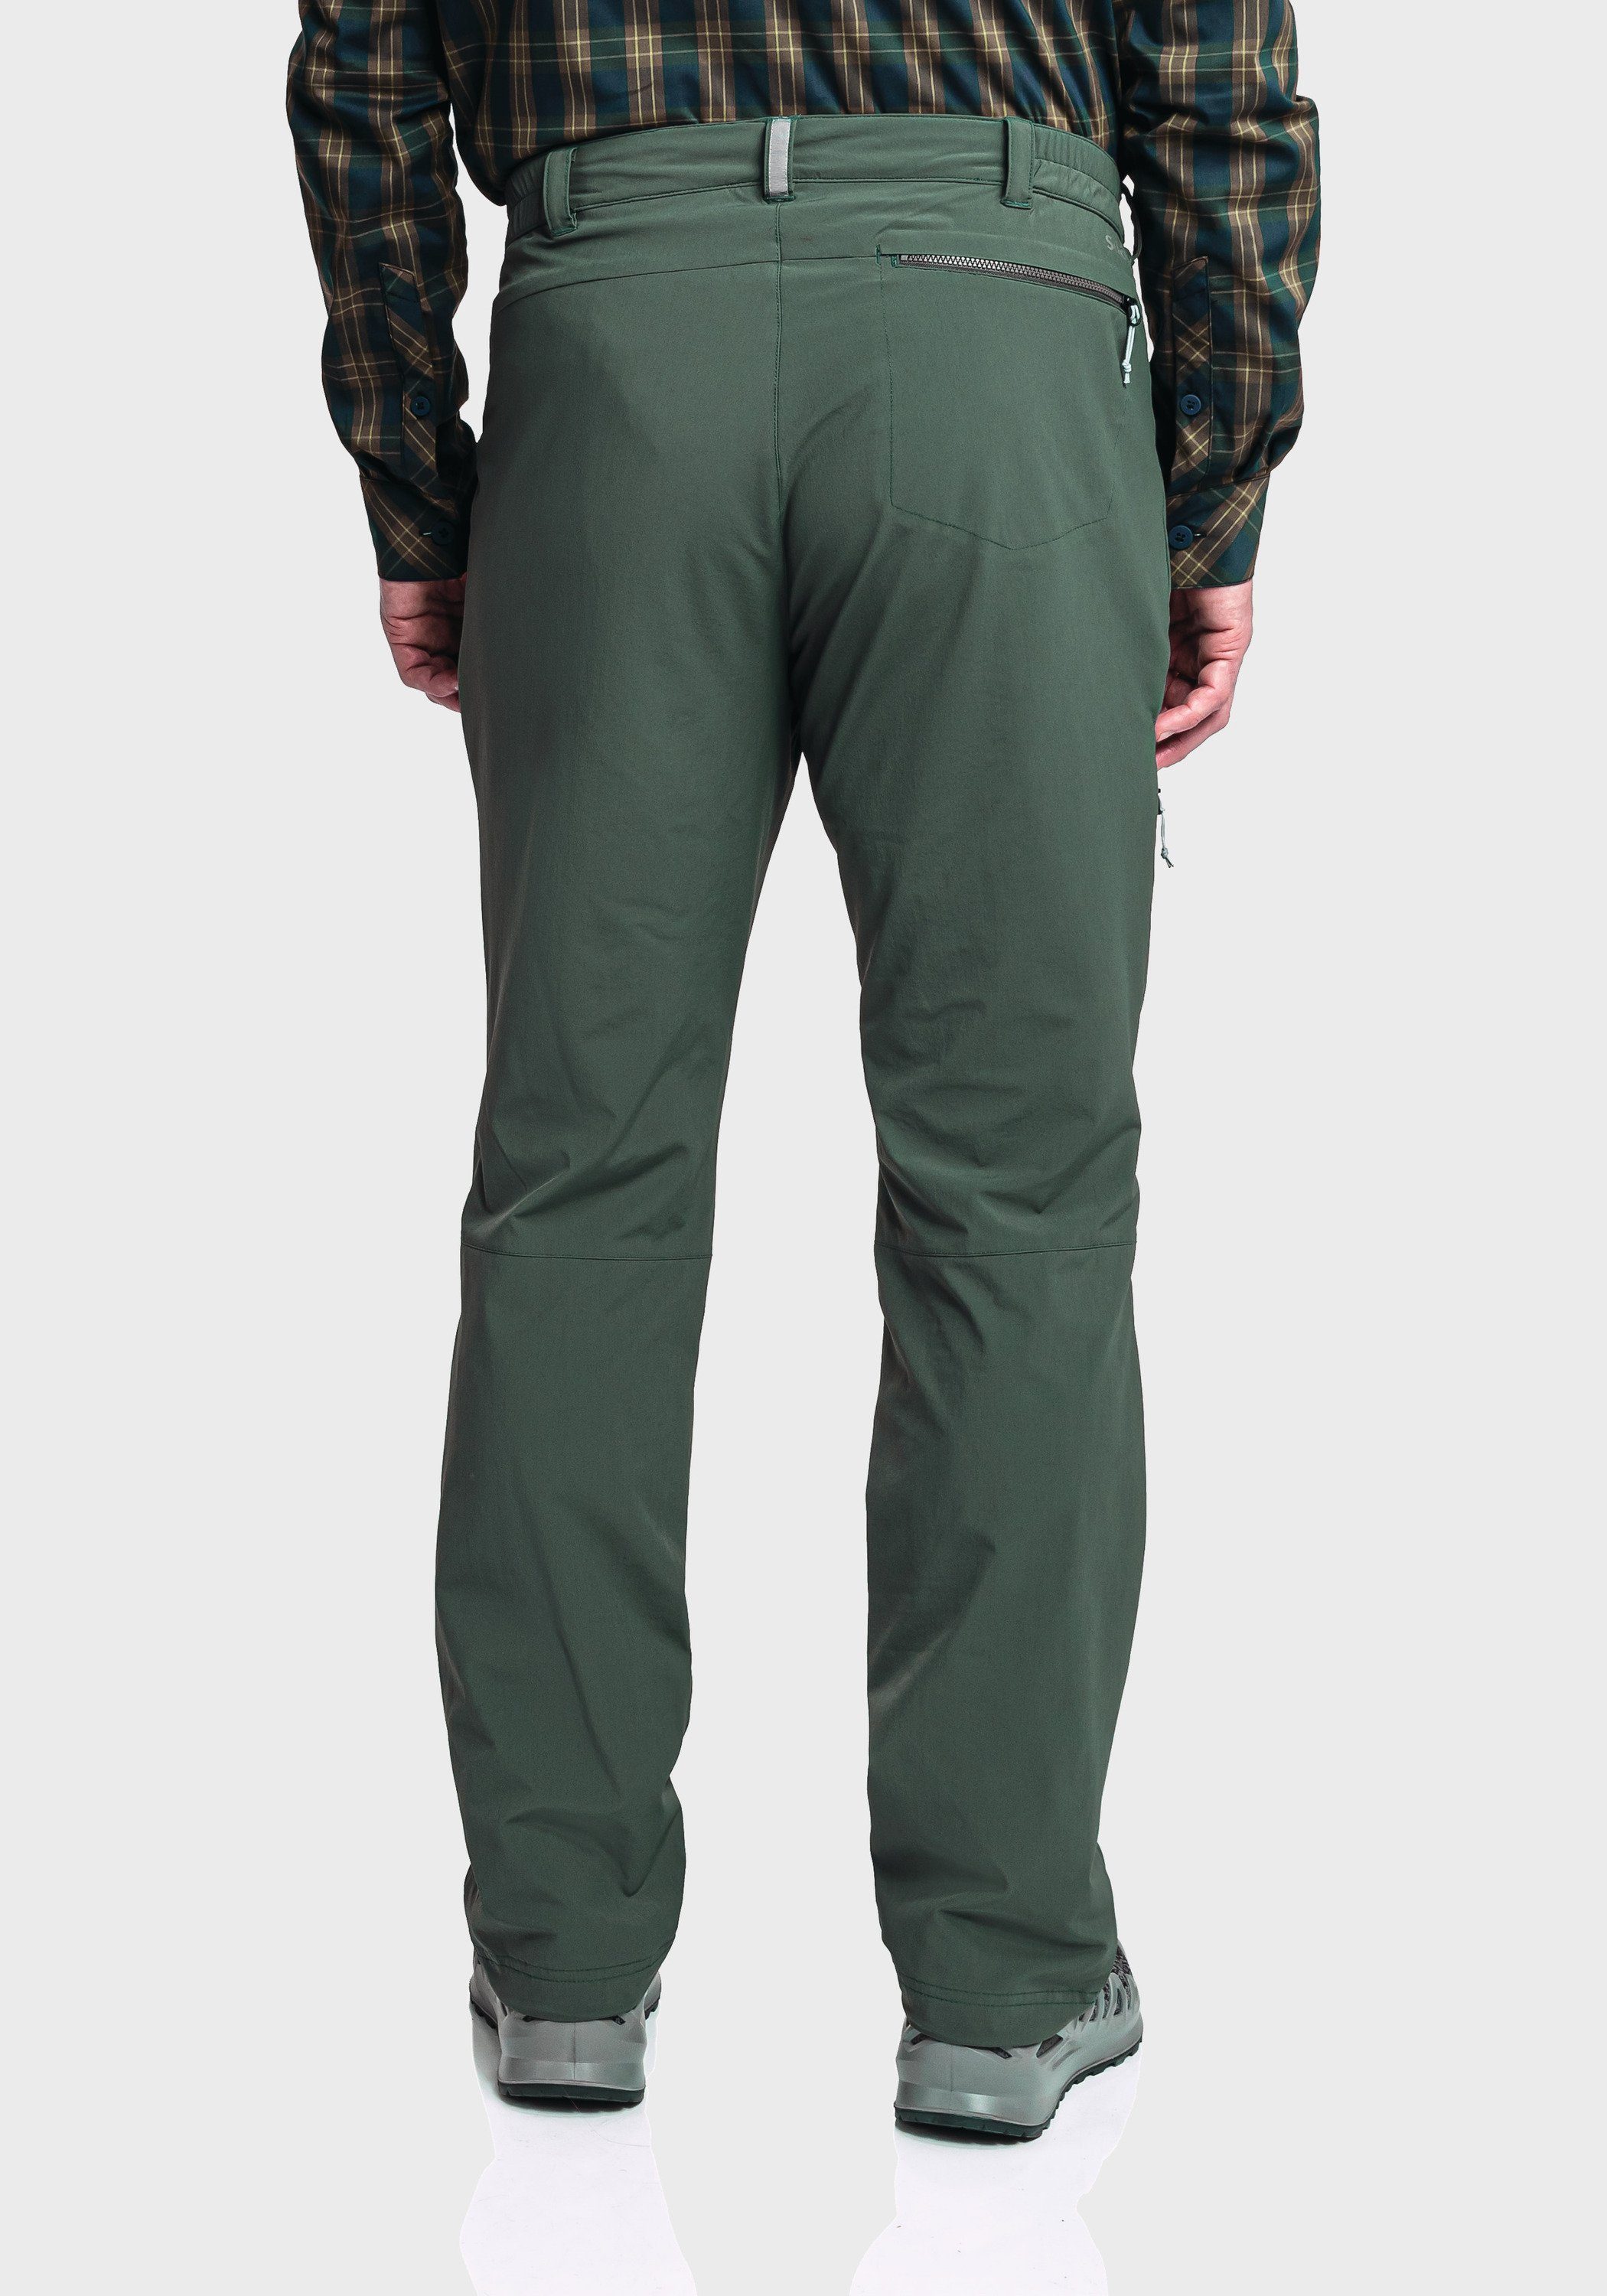 Outdoorhose Pants Warm Koper1 Schöffel M grün